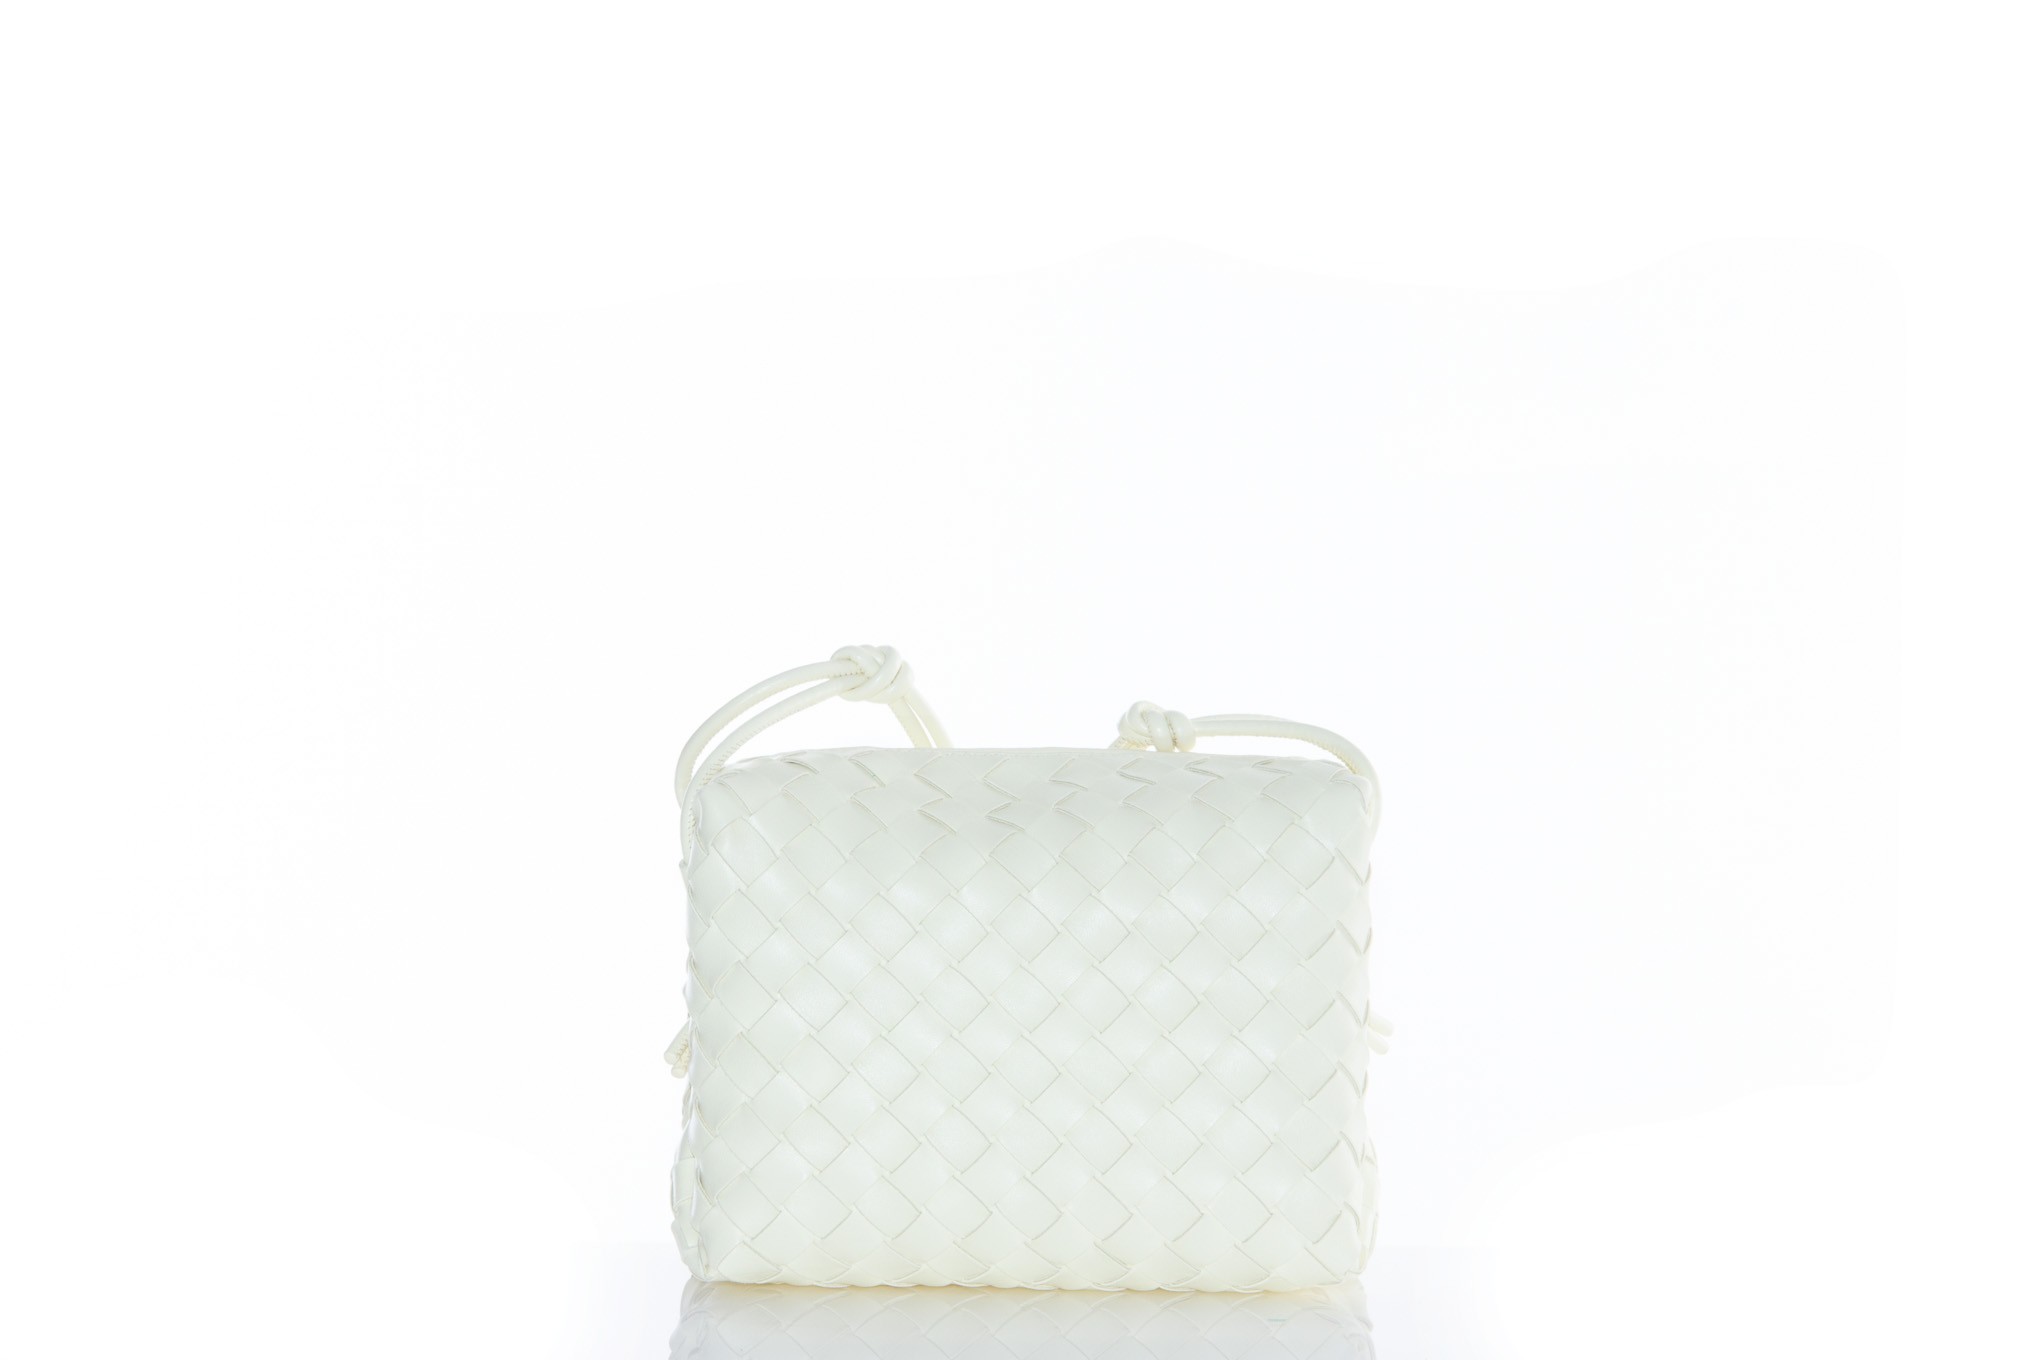 Bottega Veneta | Mini Loop Leather Shoulder Bag | Beige Tu